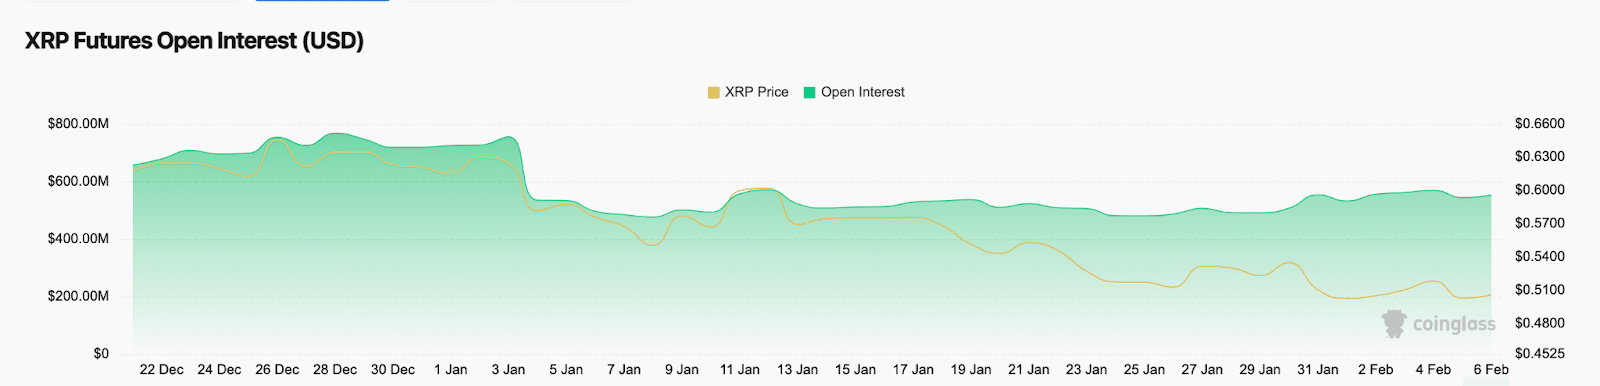 Ripple (XRP) Open Interest vs. Price